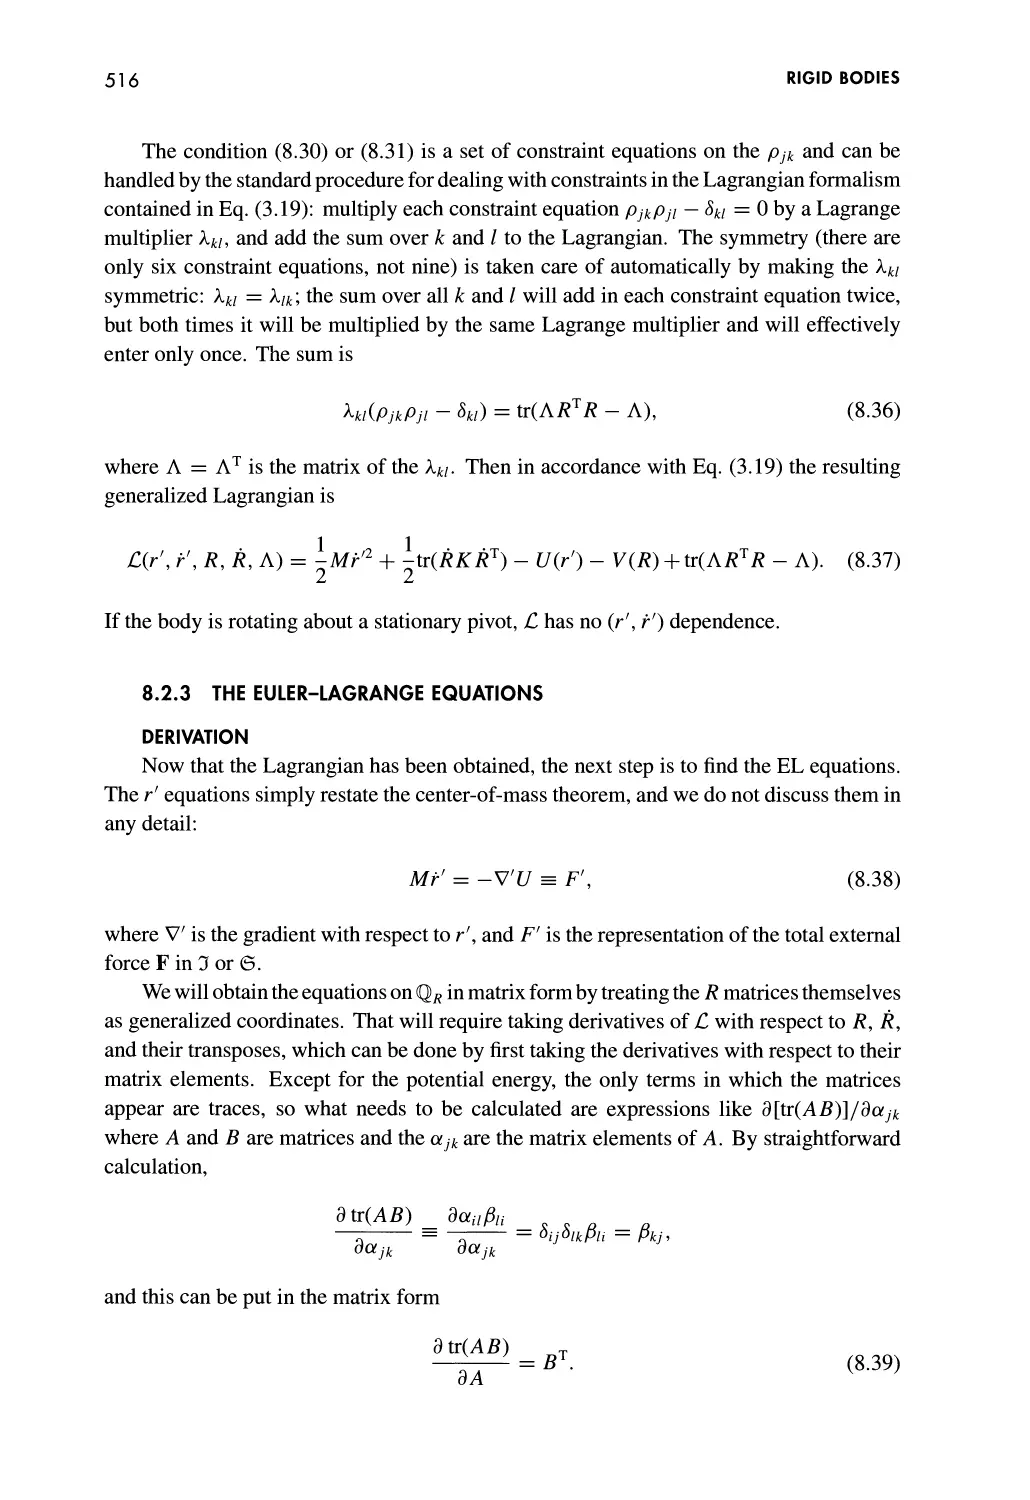 8.2.3 The Euler-Lagrange Equations